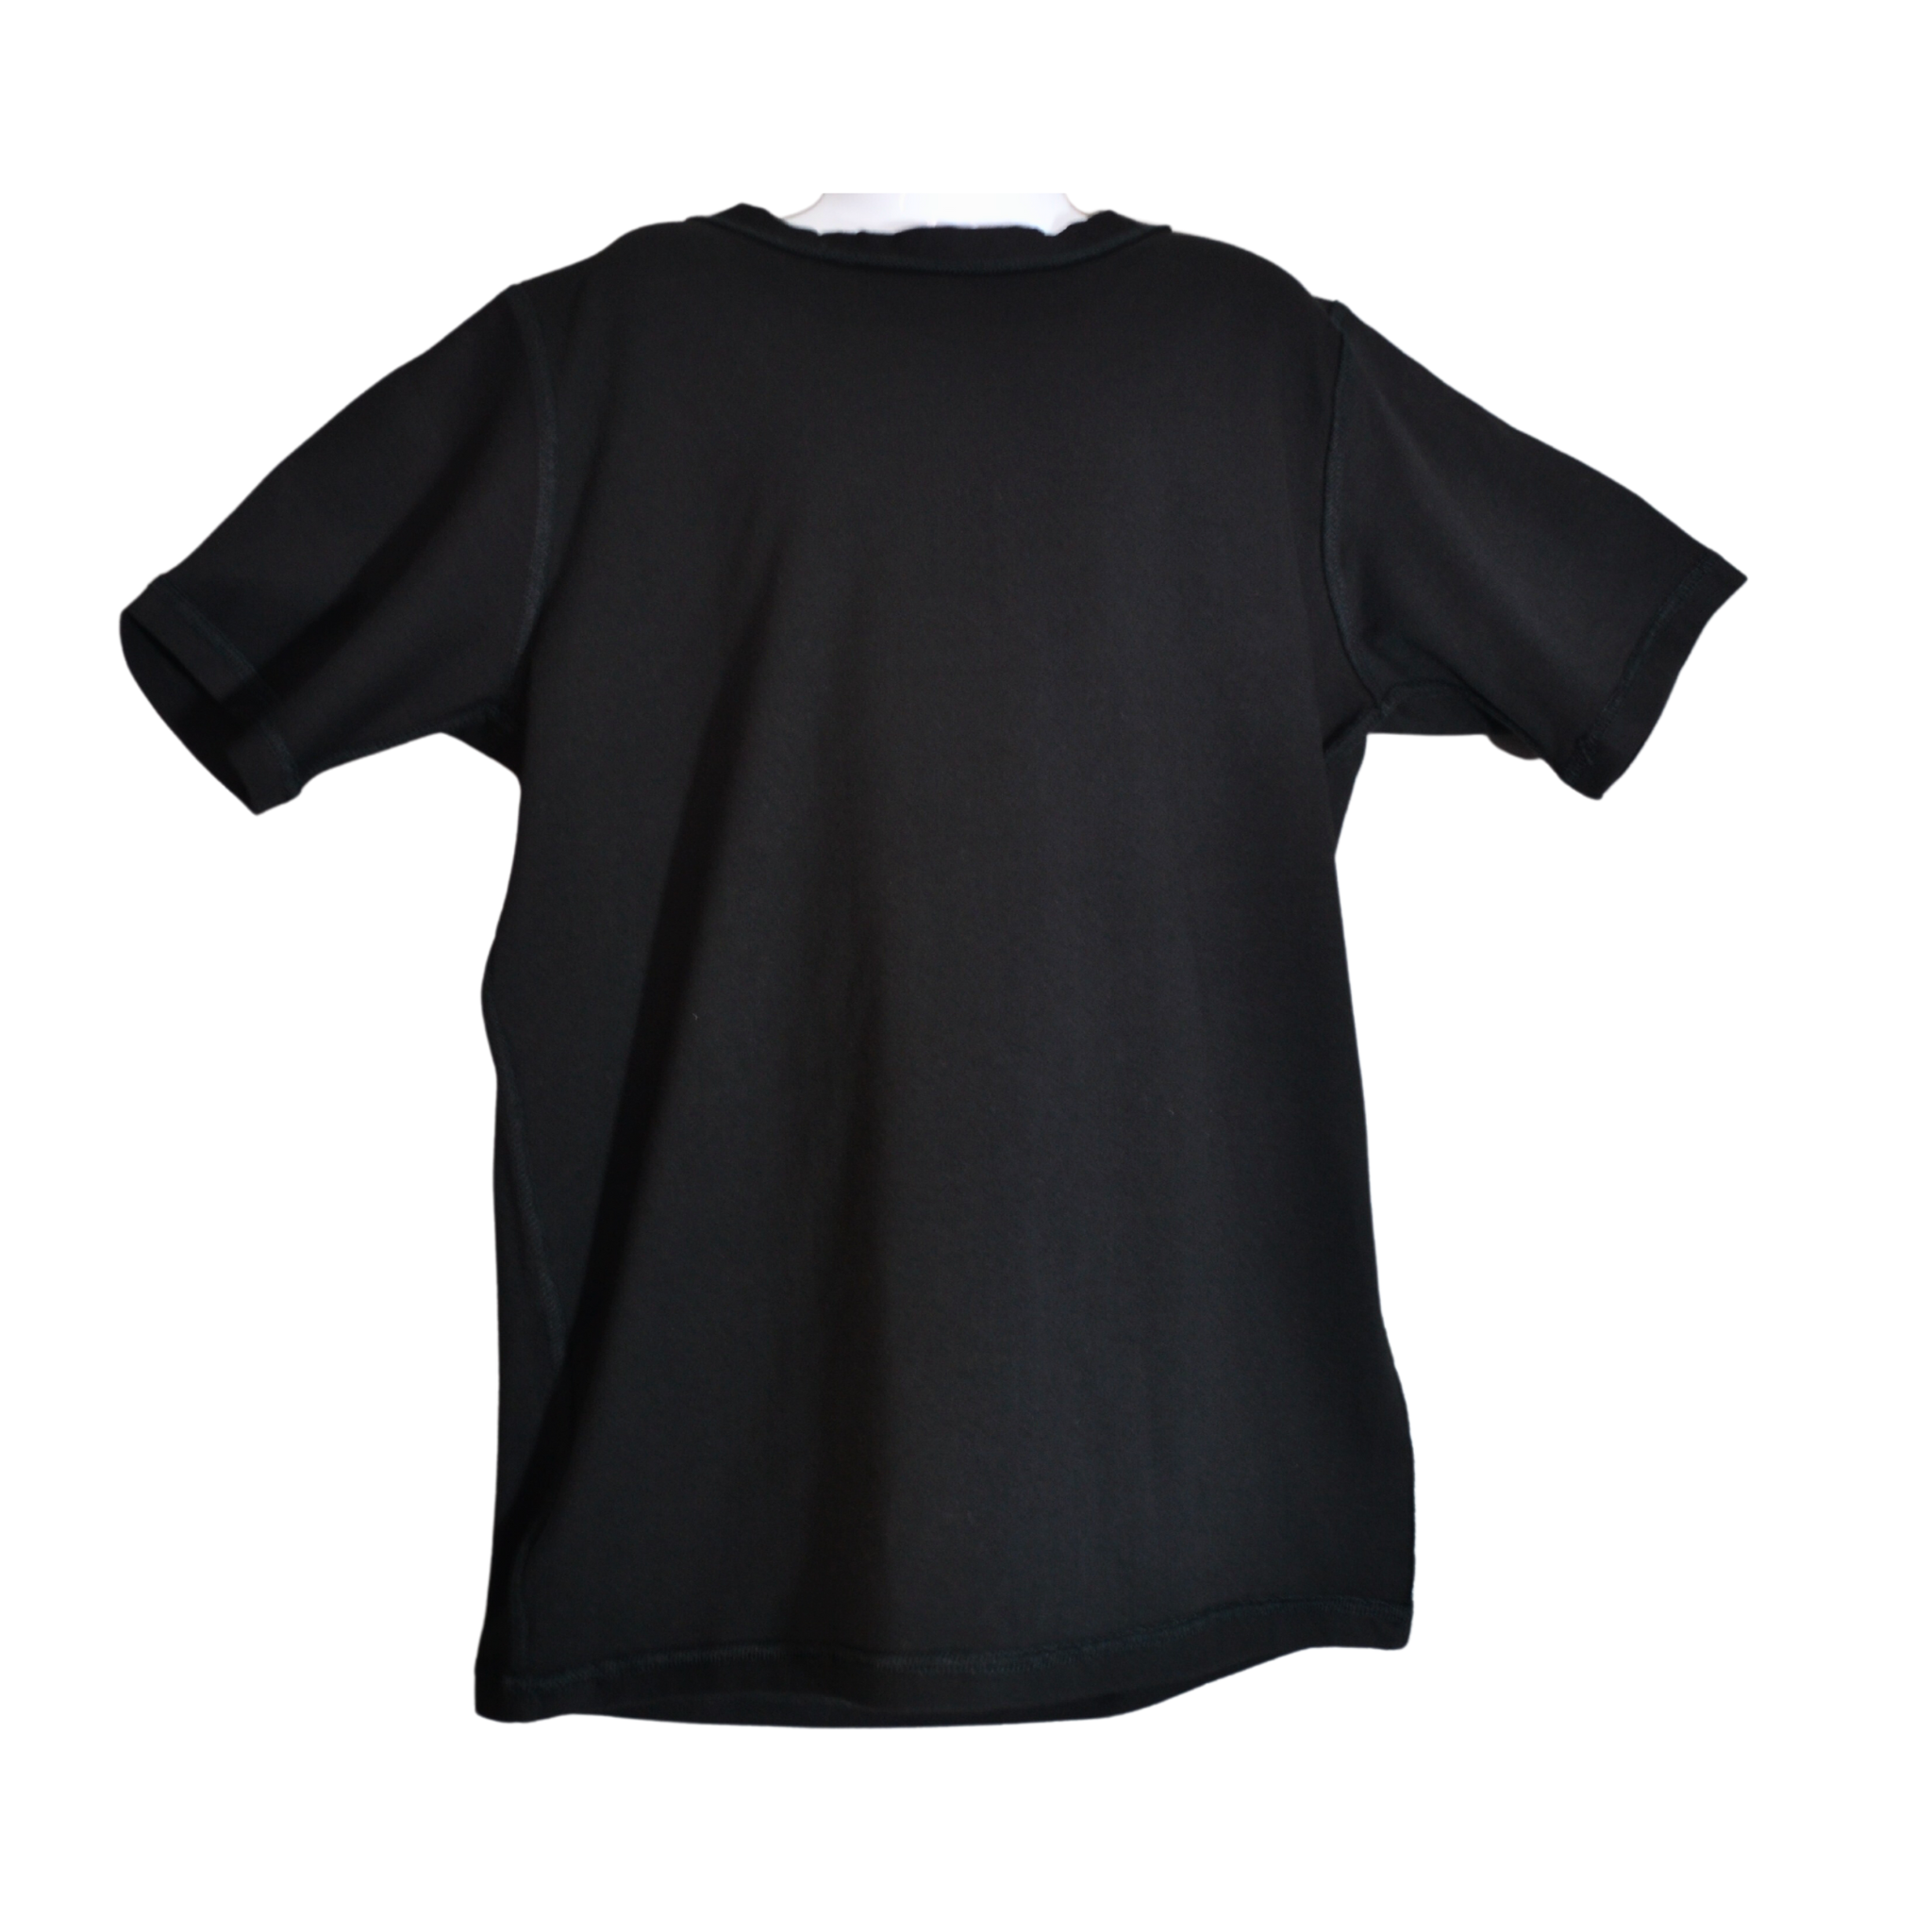 Spectra Sensory Clothing - Sensory Friendly Reversible Tee Shirt - Black